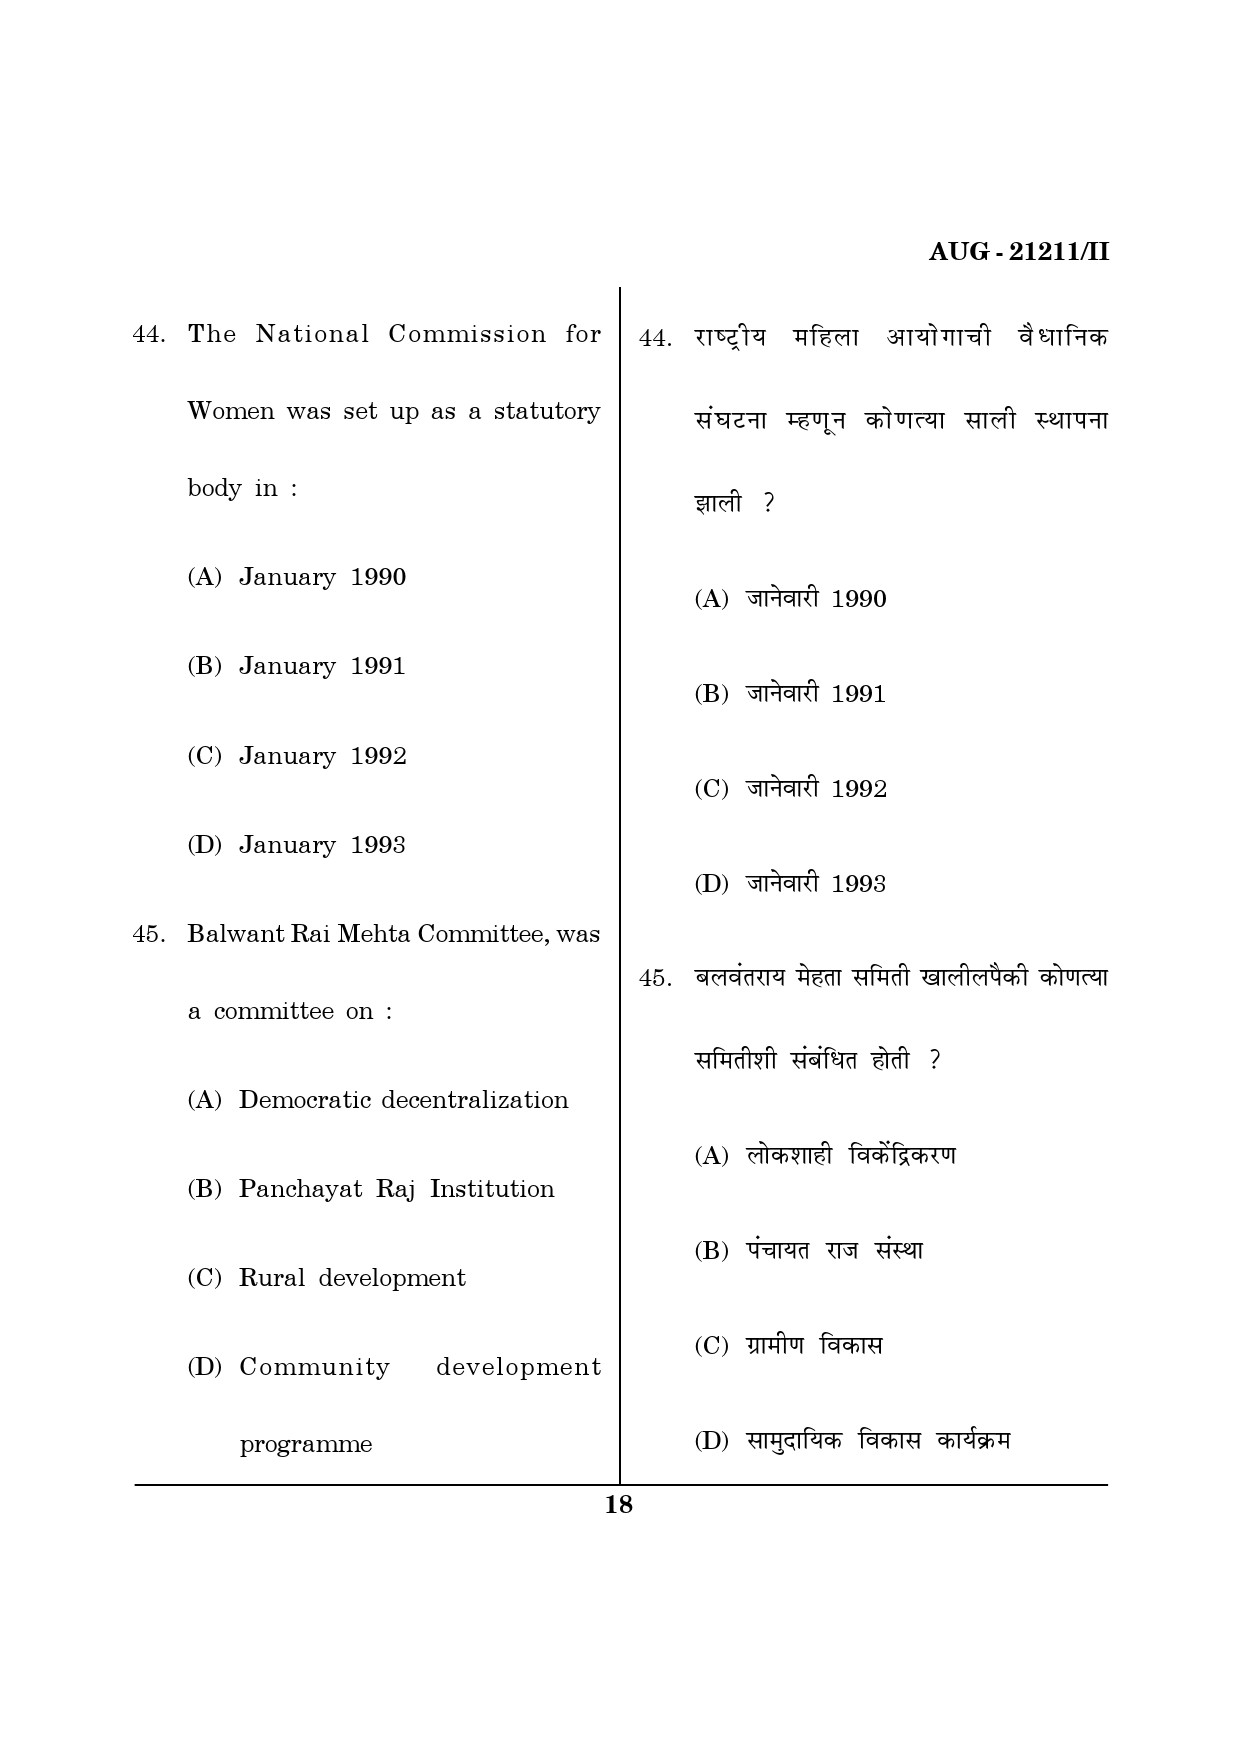 Maharashtra SET Public Administration Question Paper II August 2011 18